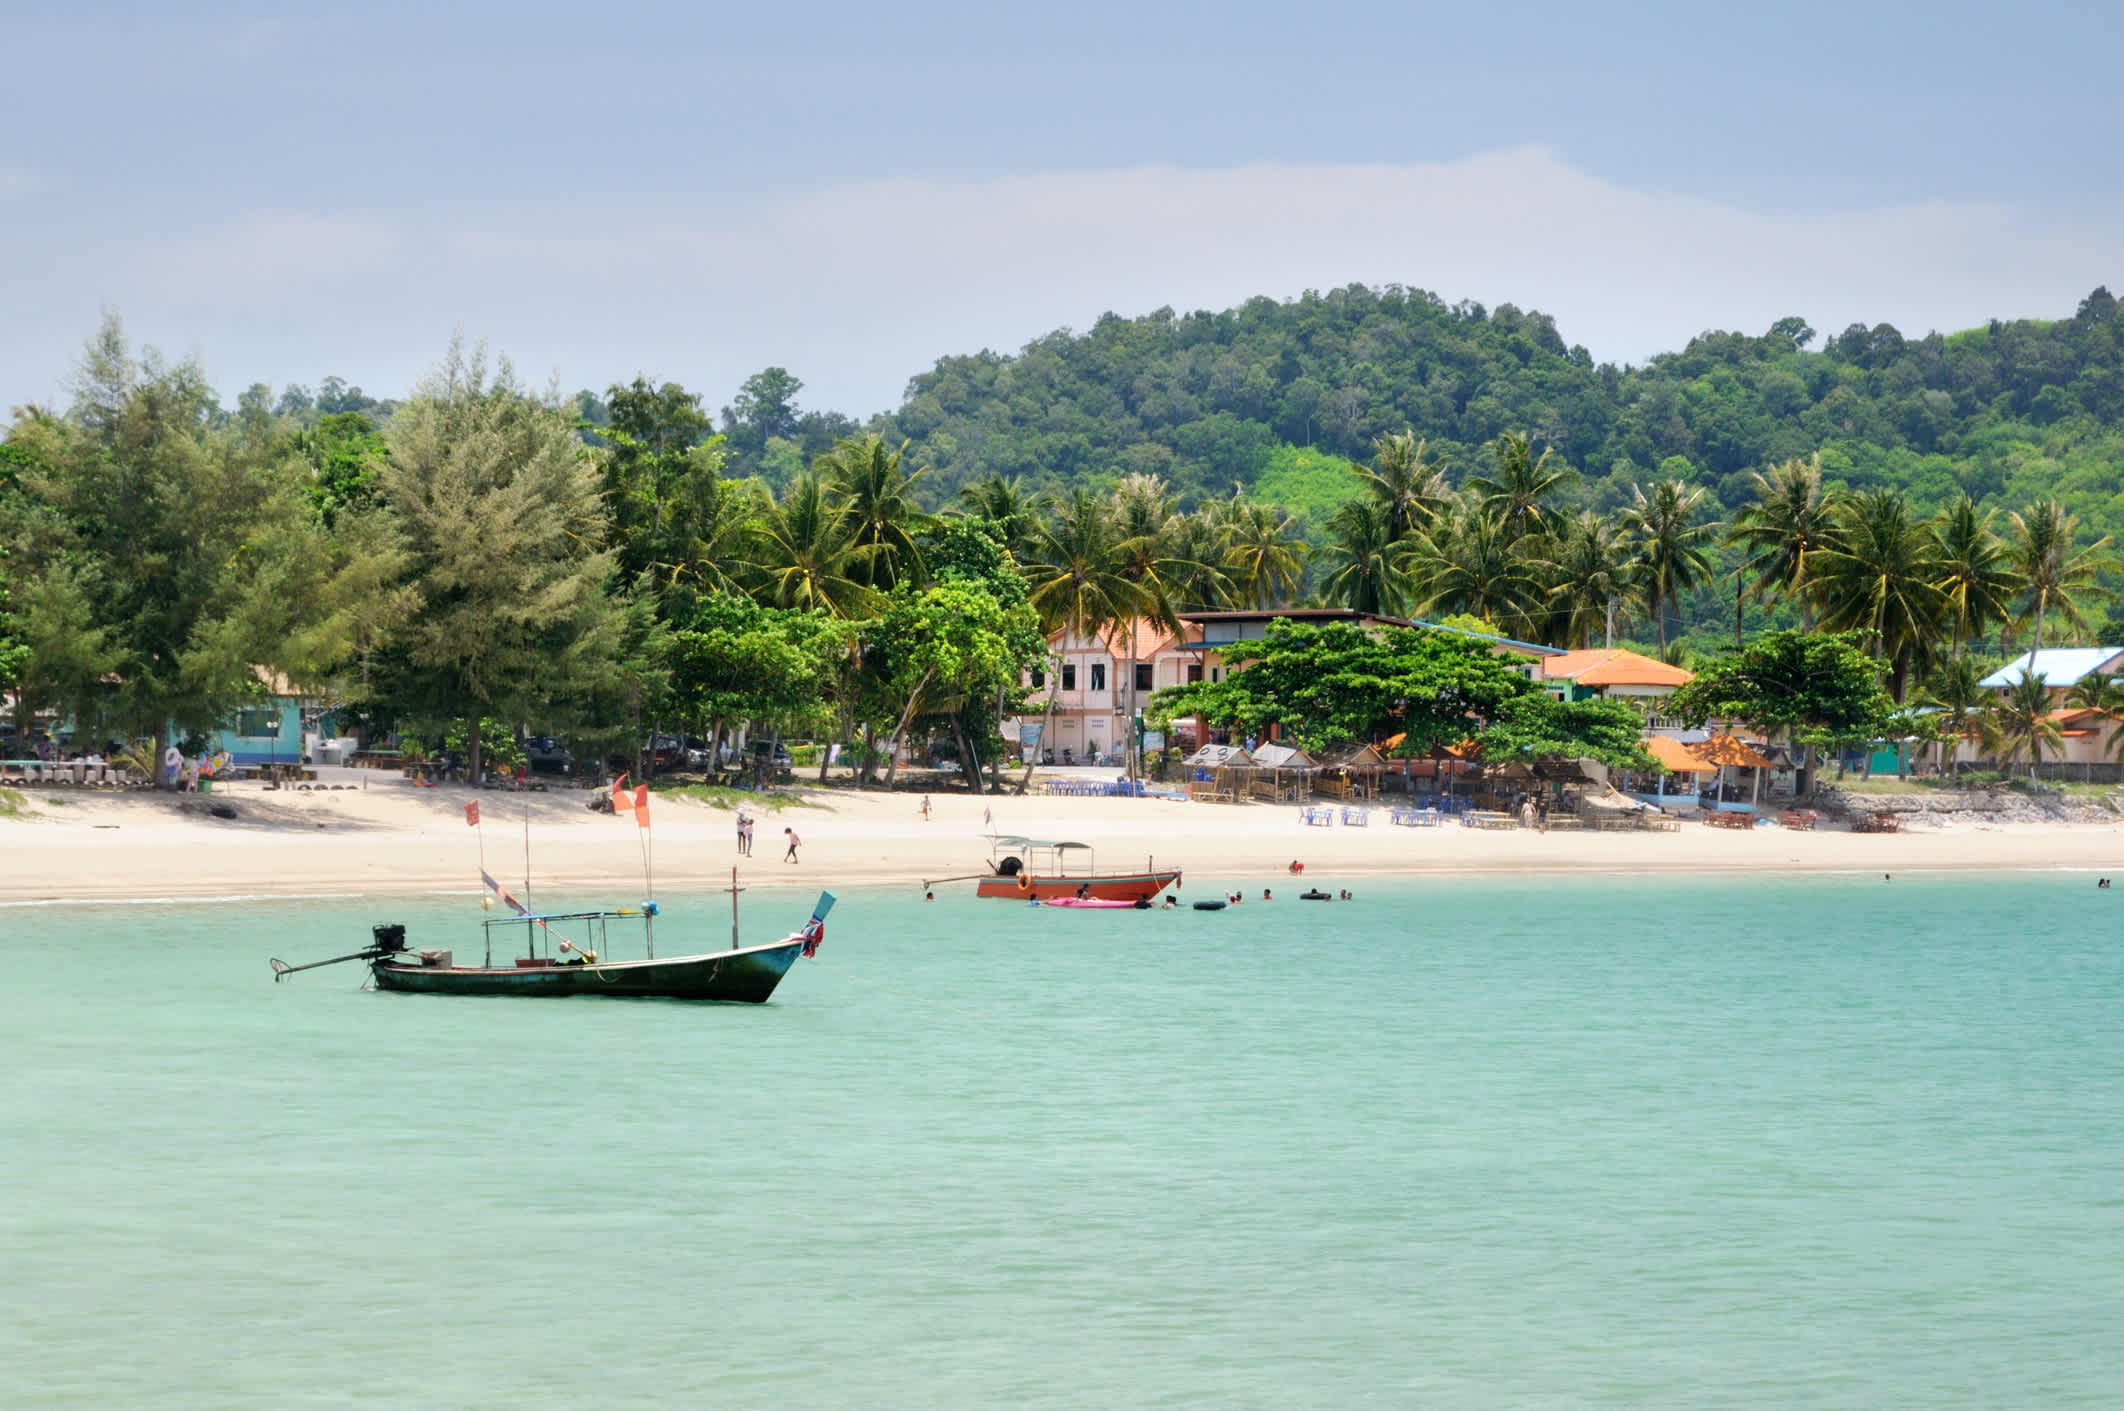 Blick auf den Haad Kwang Pao Beach im Distrikt Khanom, Thailand.

